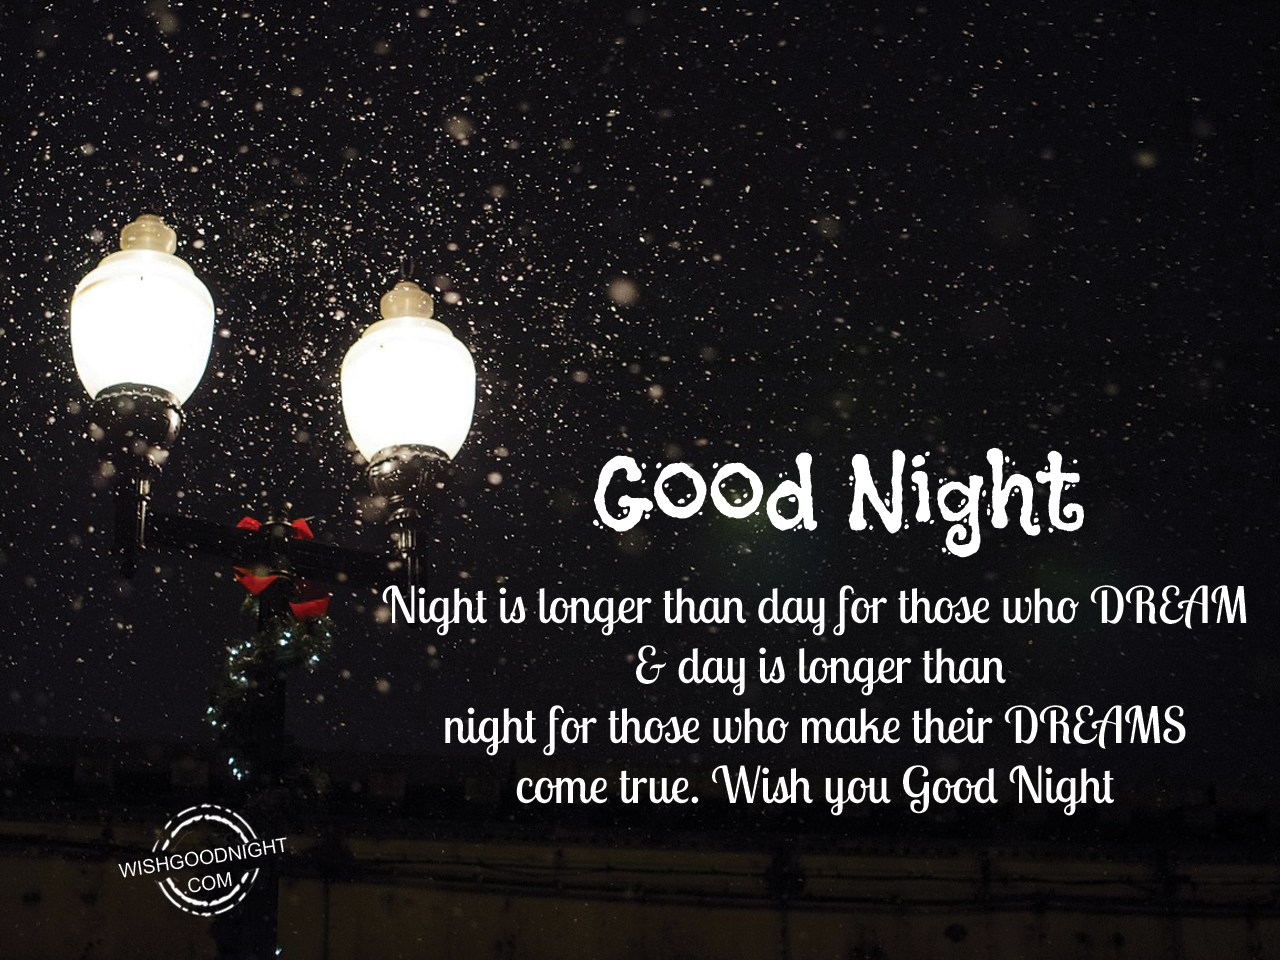 Wish you good night - Good Night Pictures – WishGoodNight.com